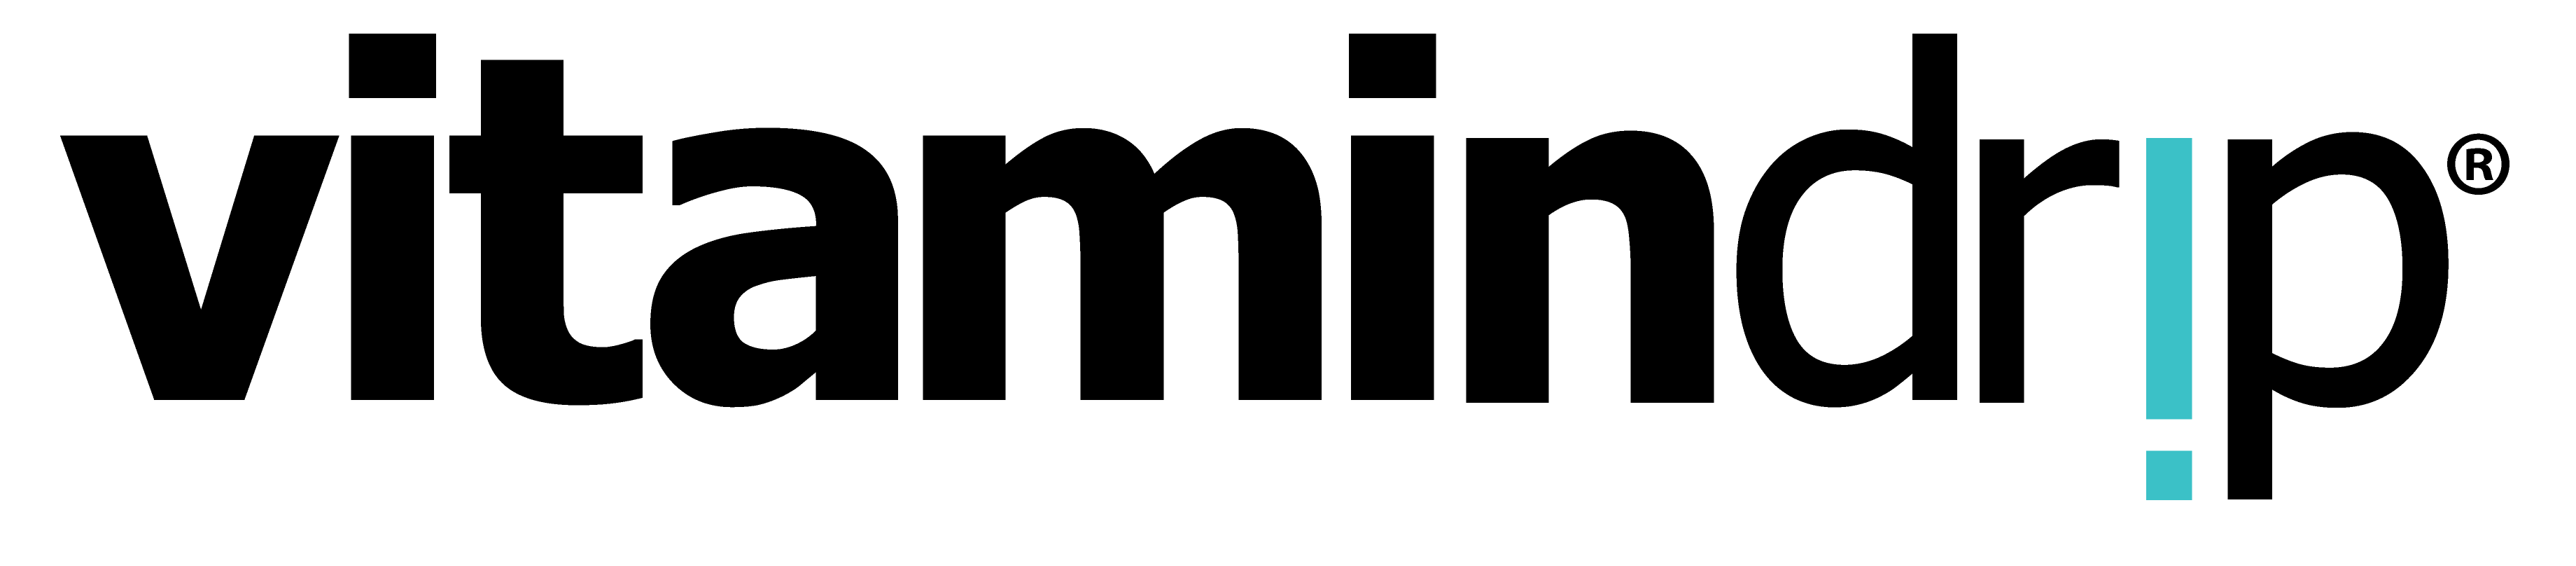 vitamindrip-logo-edmonton-ab-ca